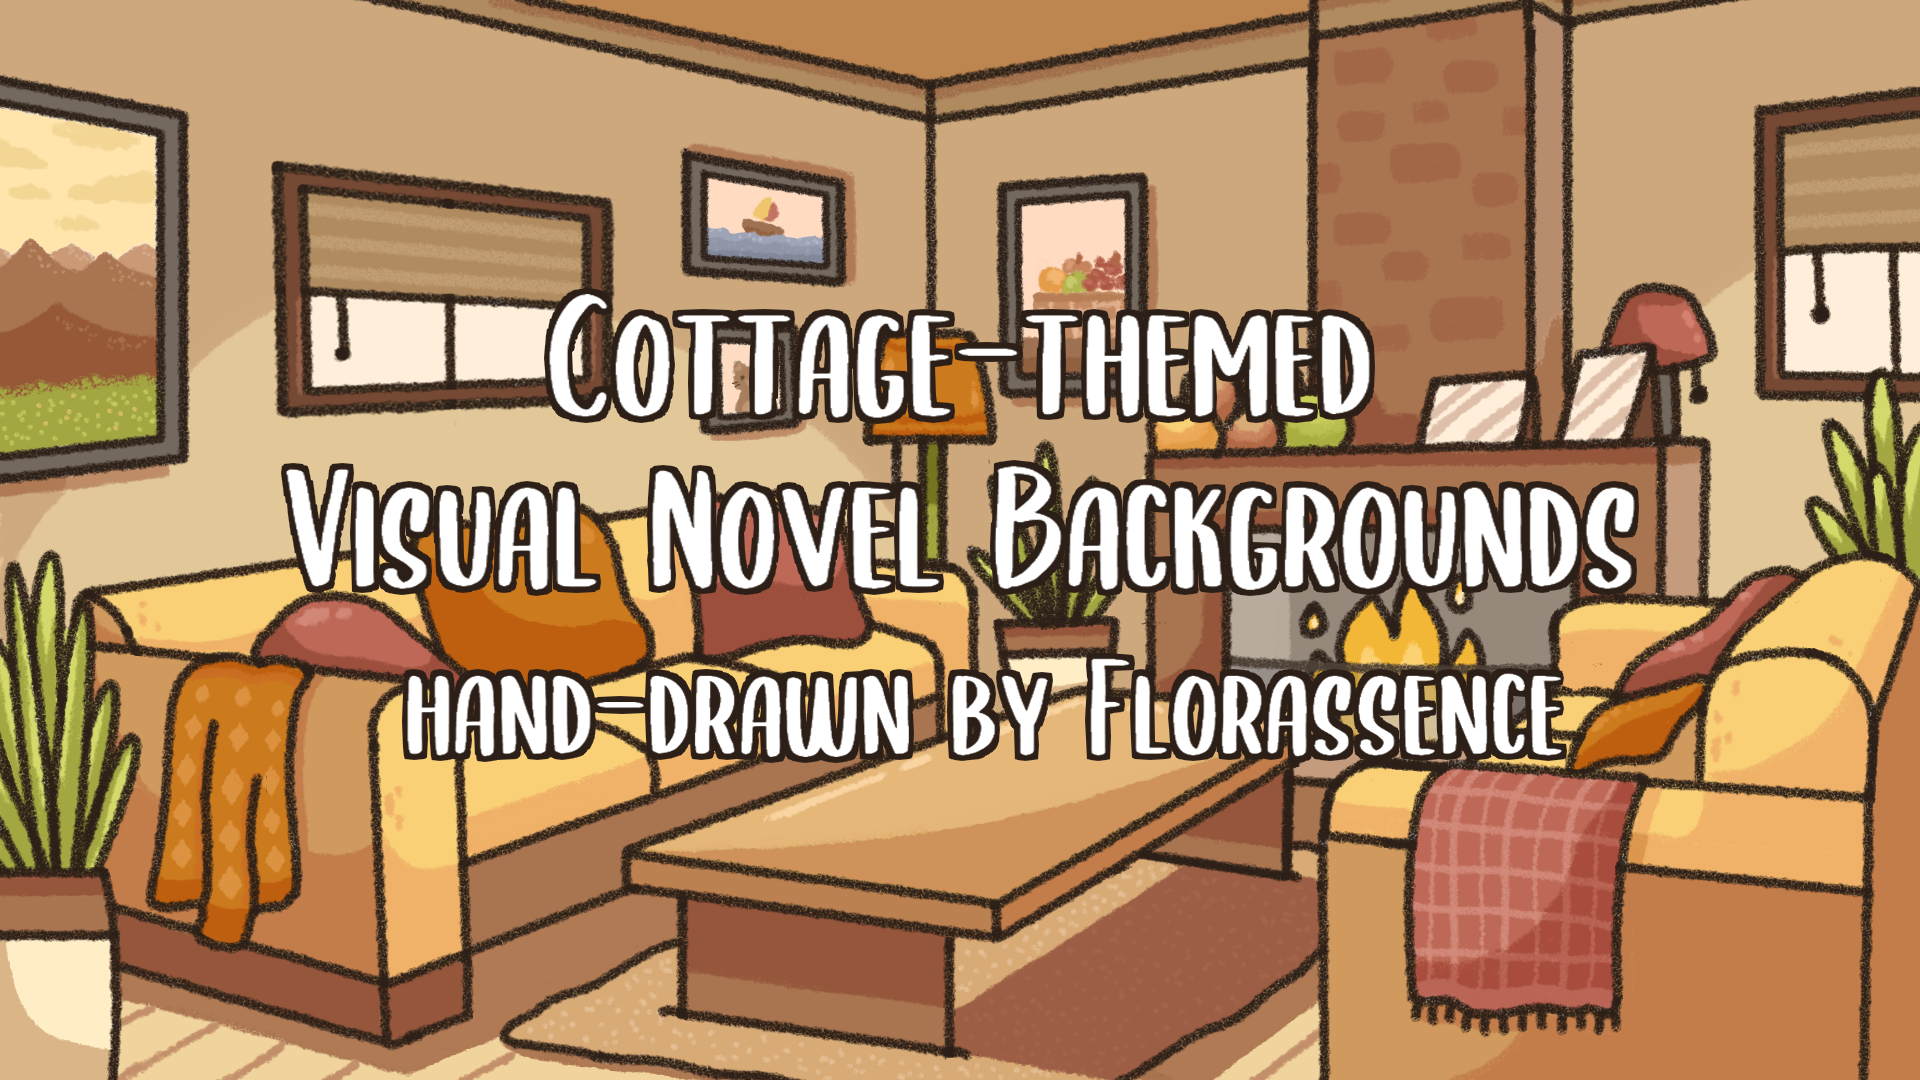 Cottage-themed Visual Novel Backgrounds